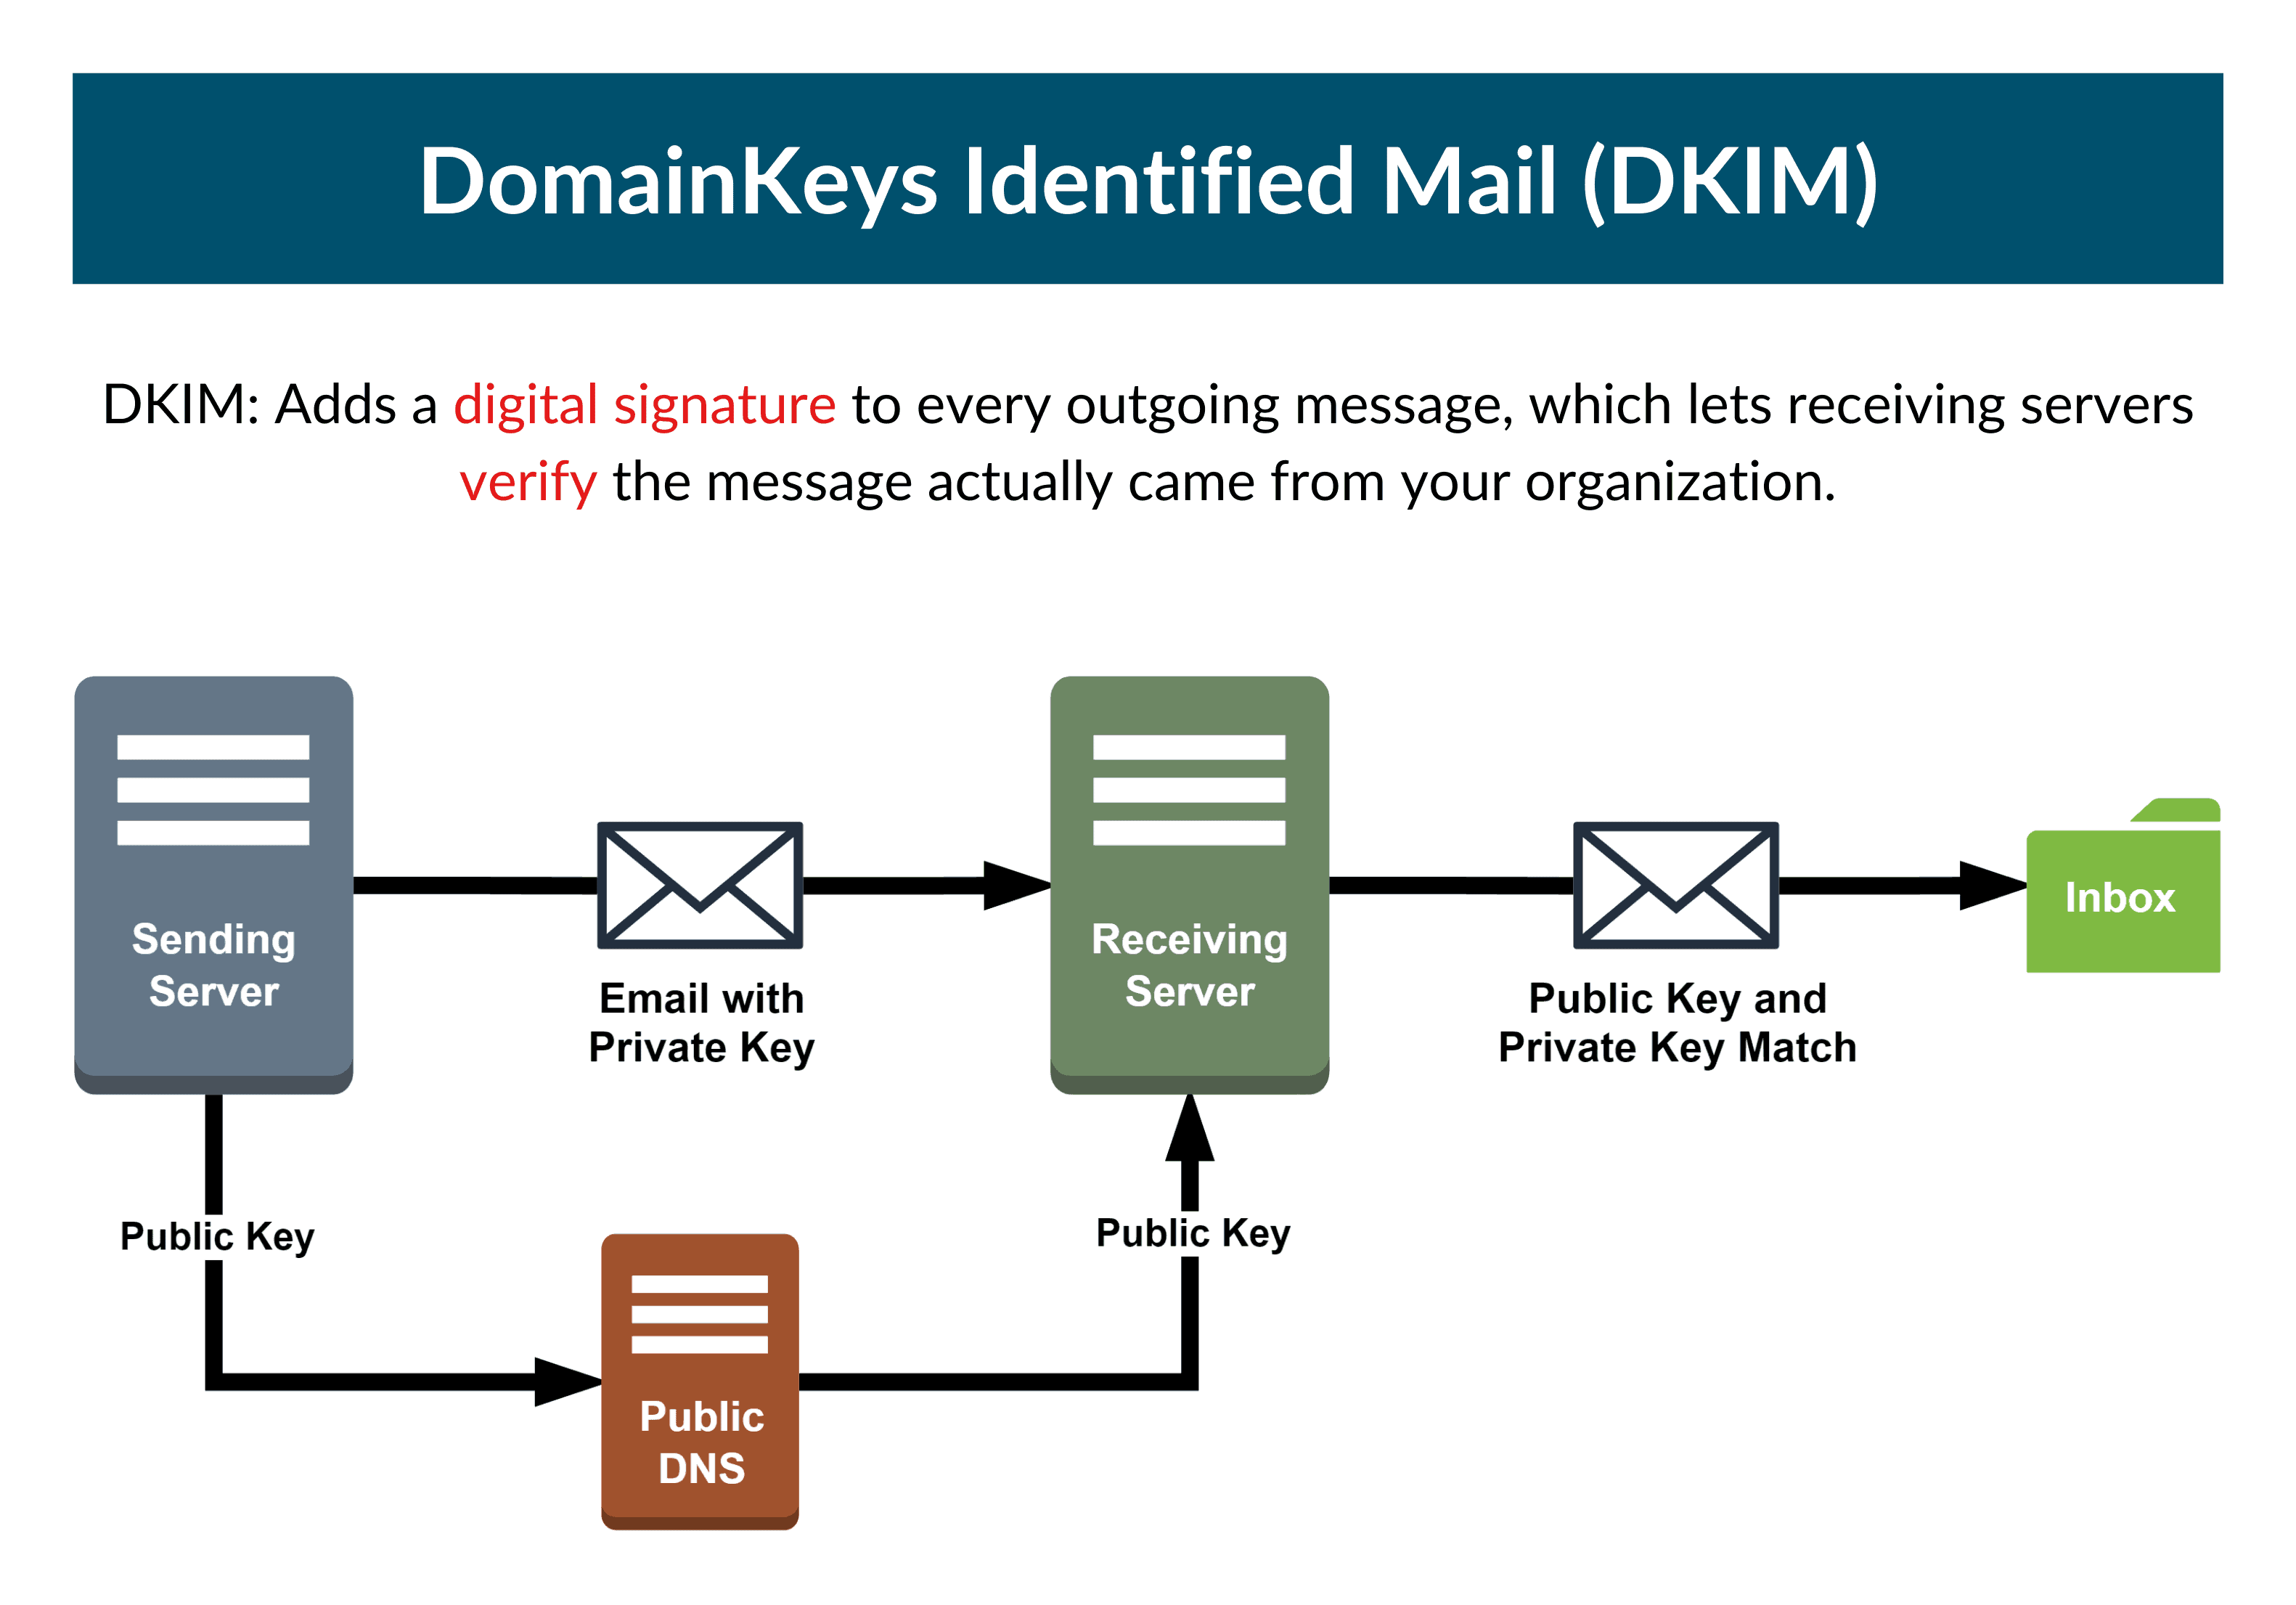 DKIM cryptographic key pair